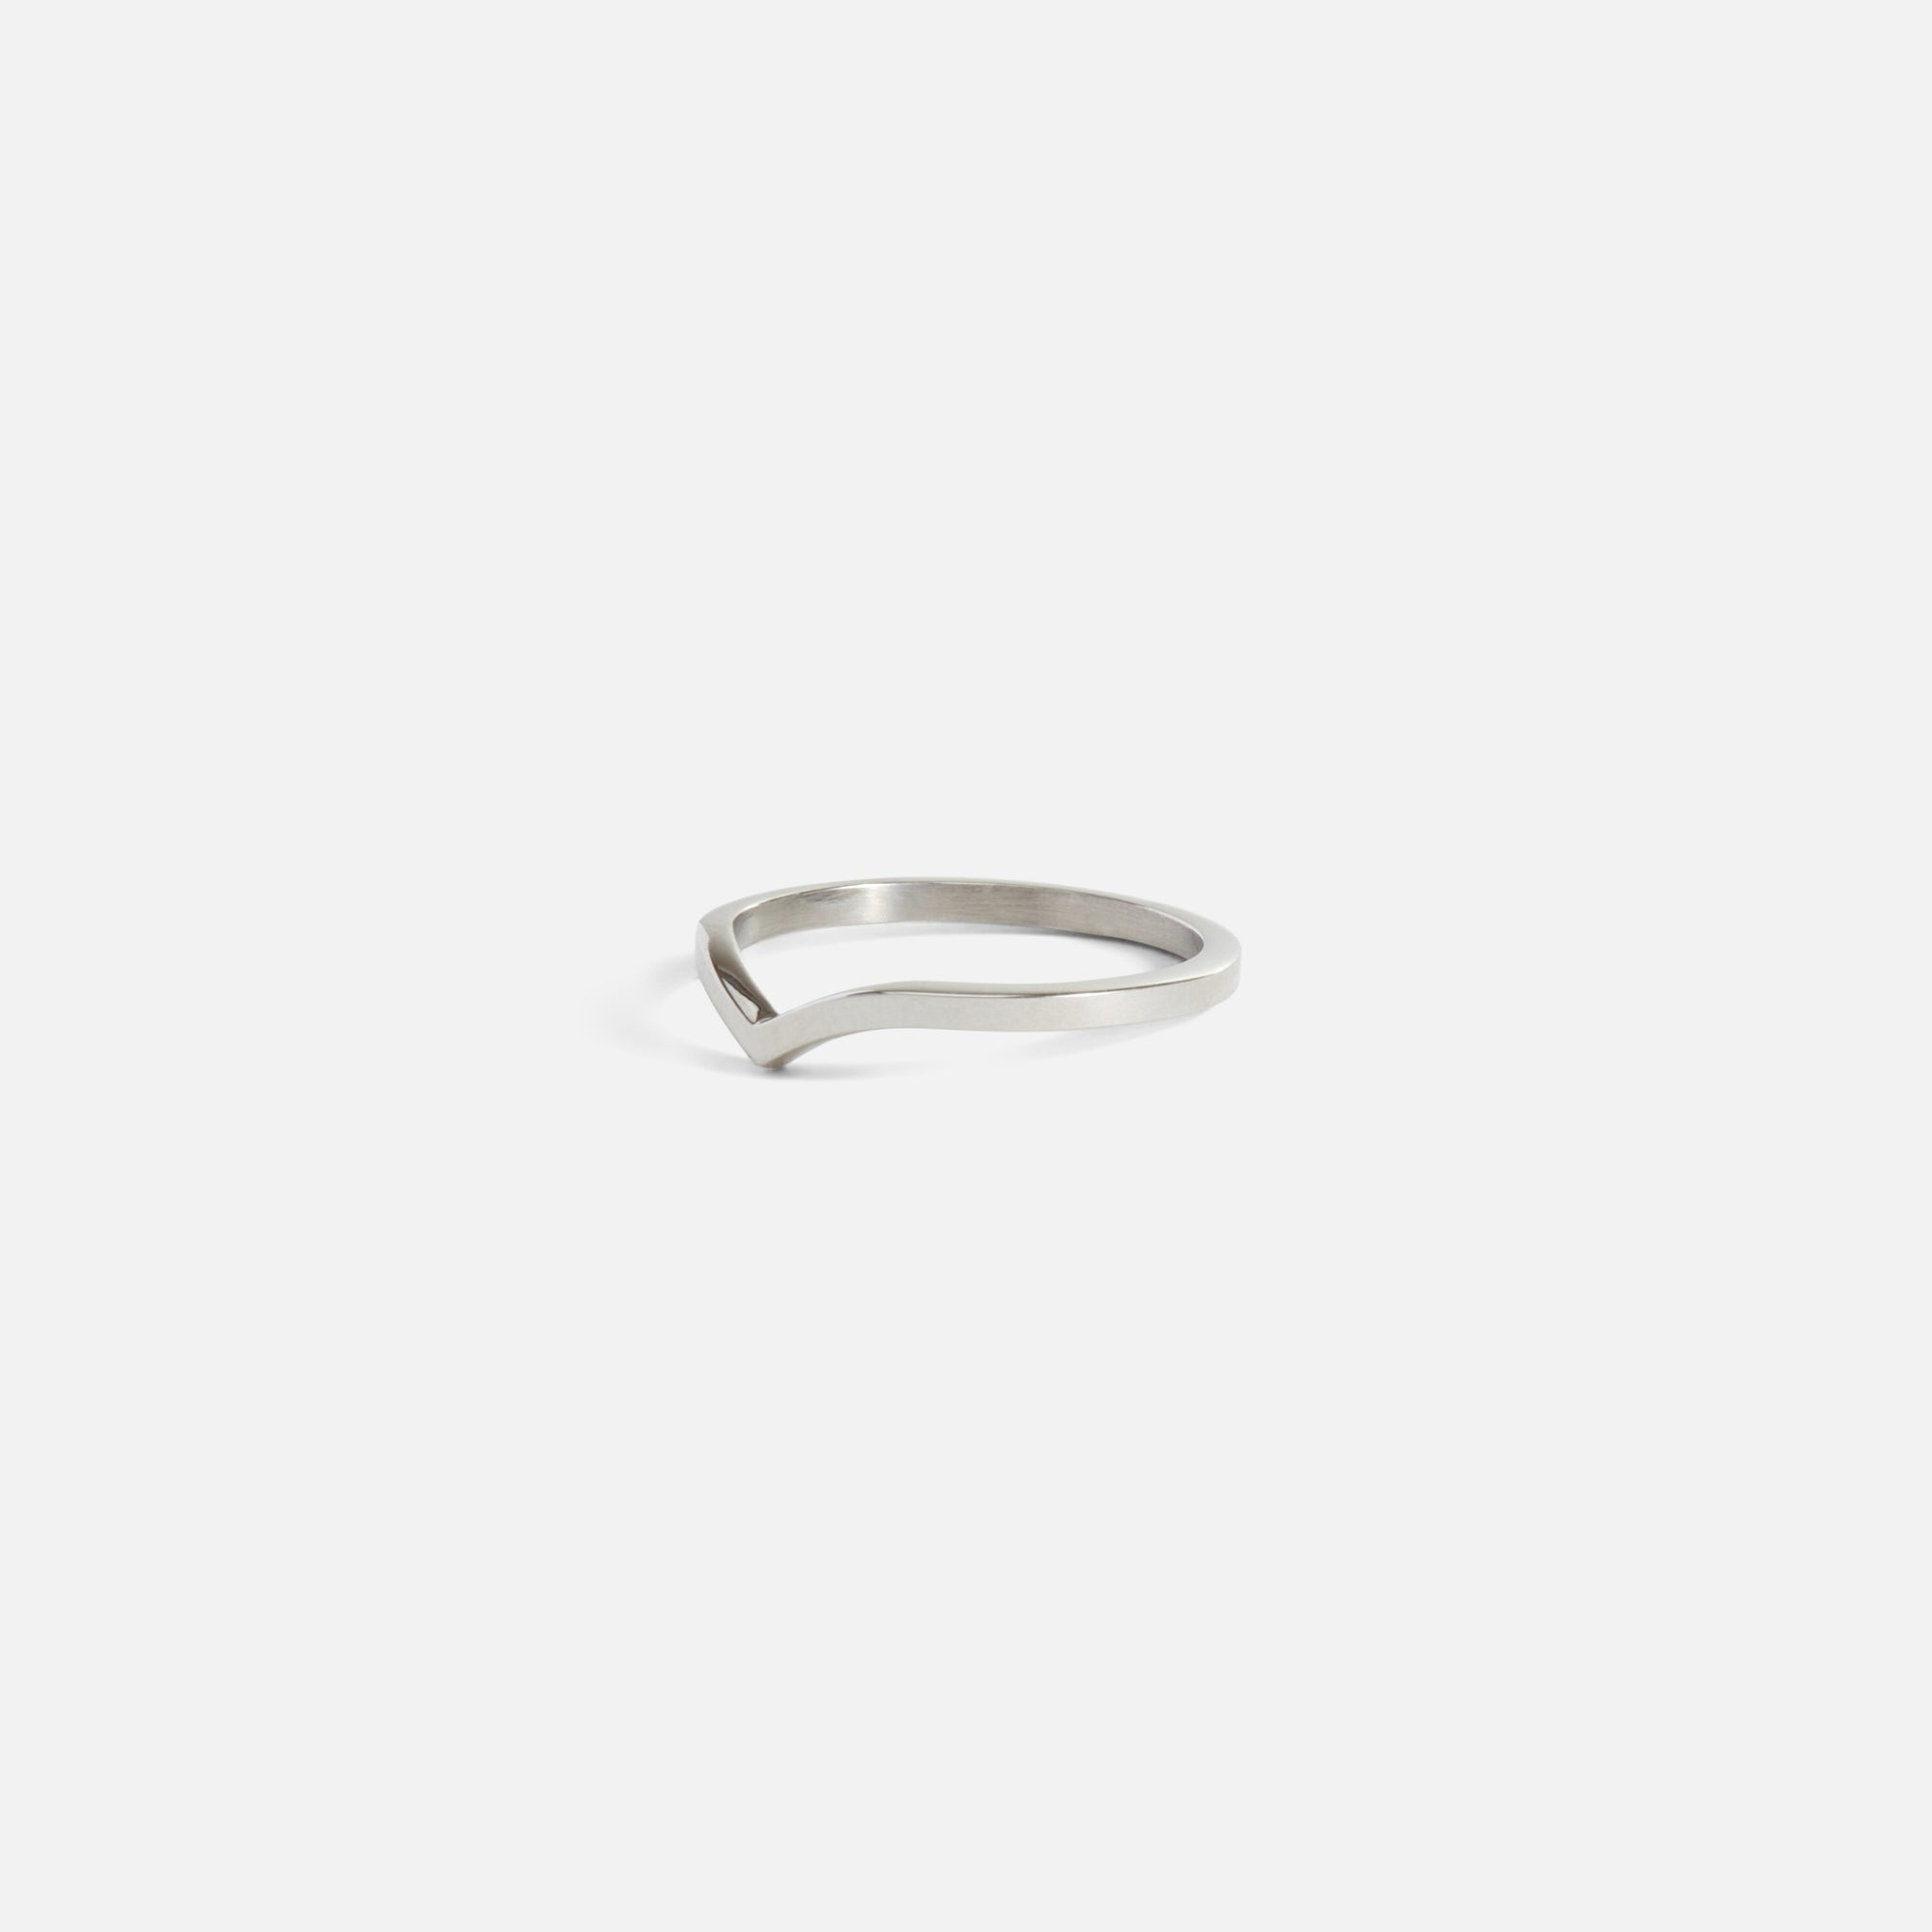 Set of silver rings v shape in stainless steel